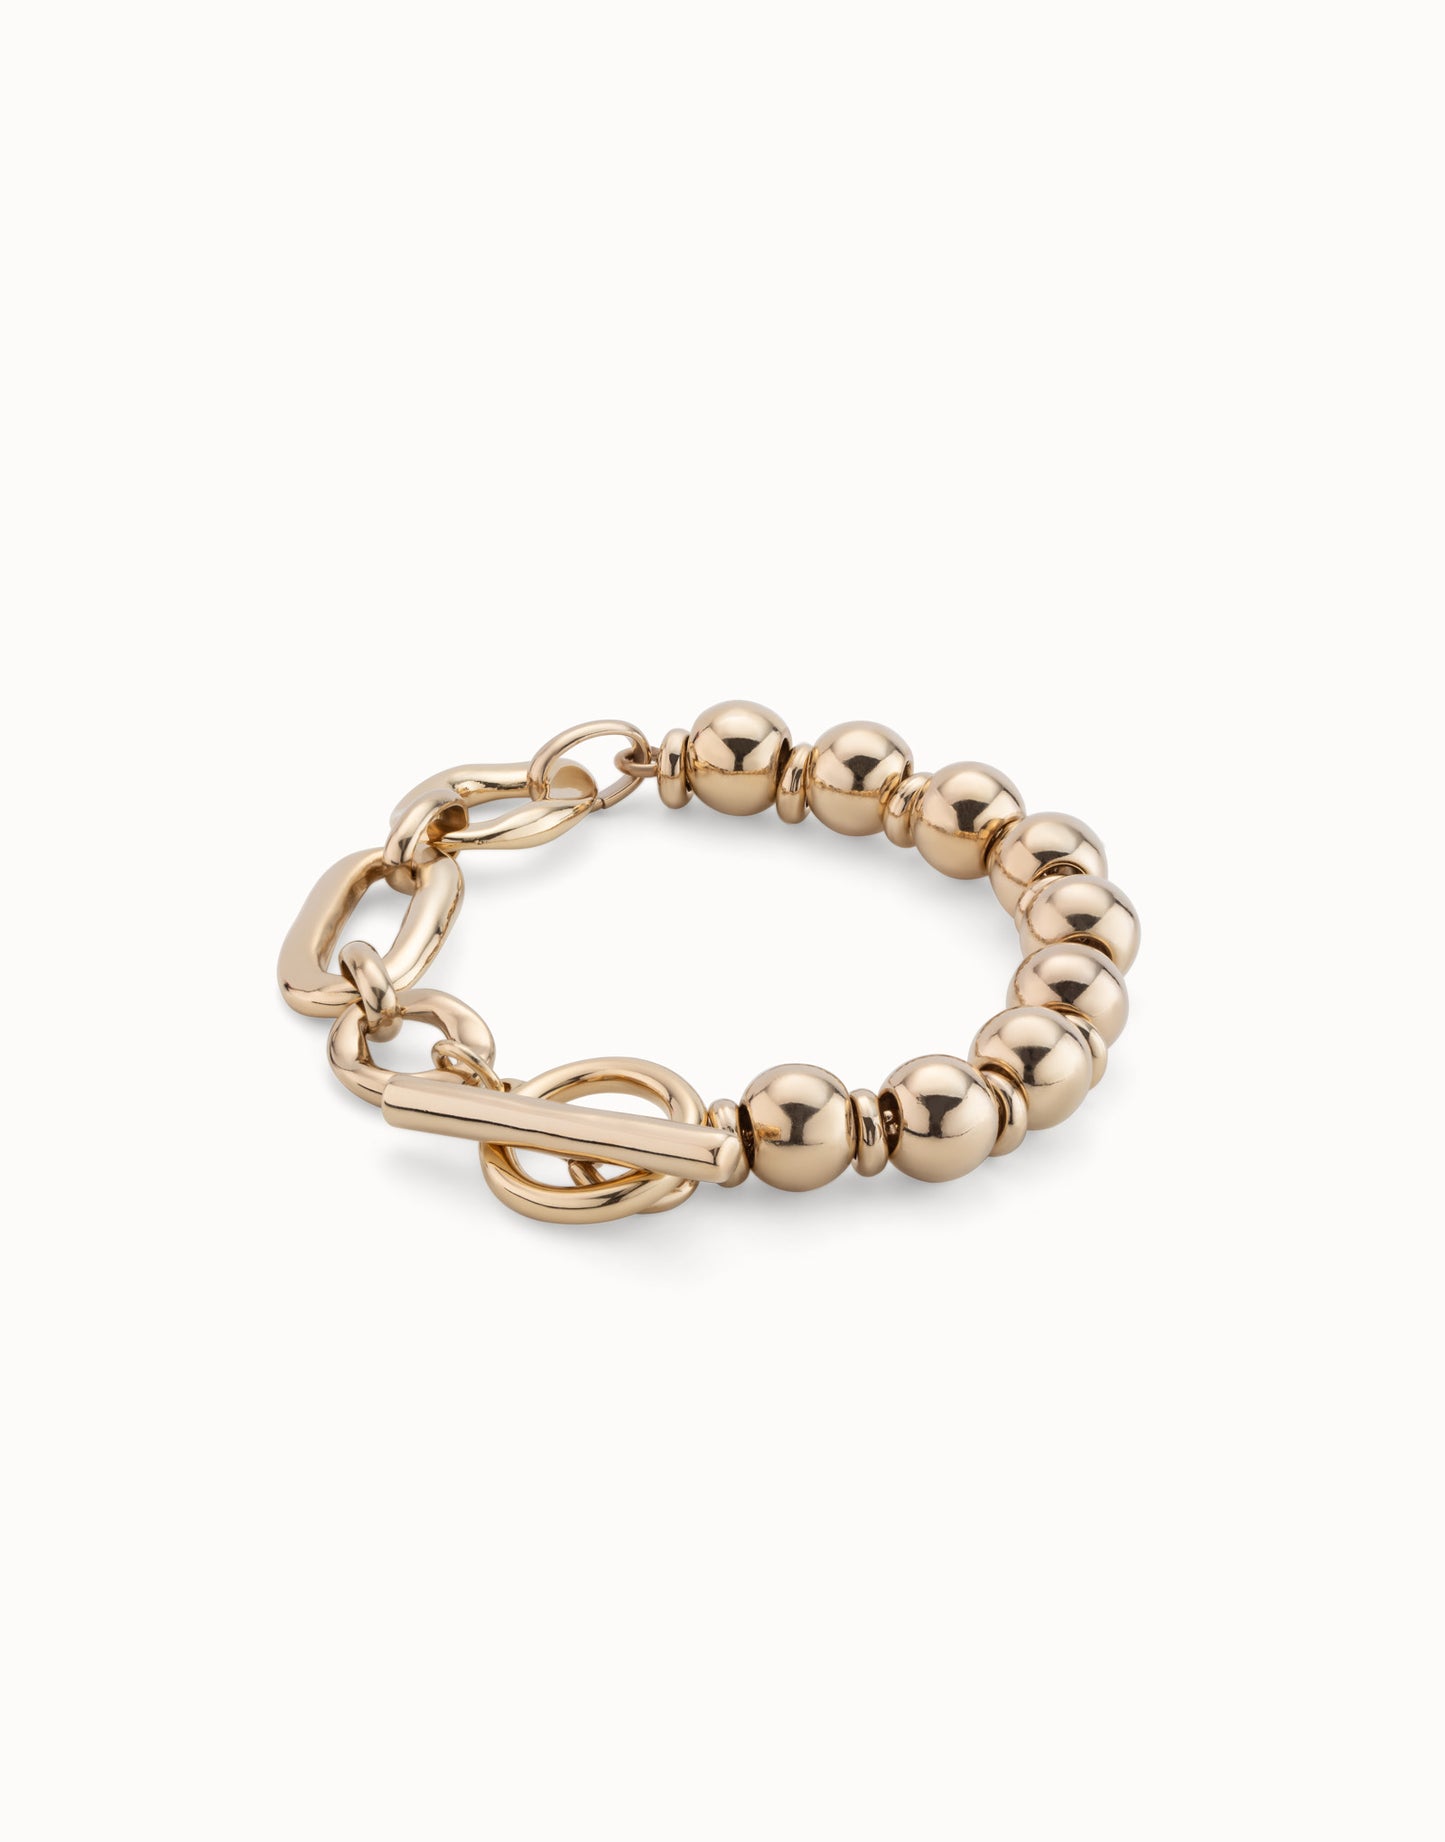 Cheerful Bracelet | Uno de 50 | Luby 